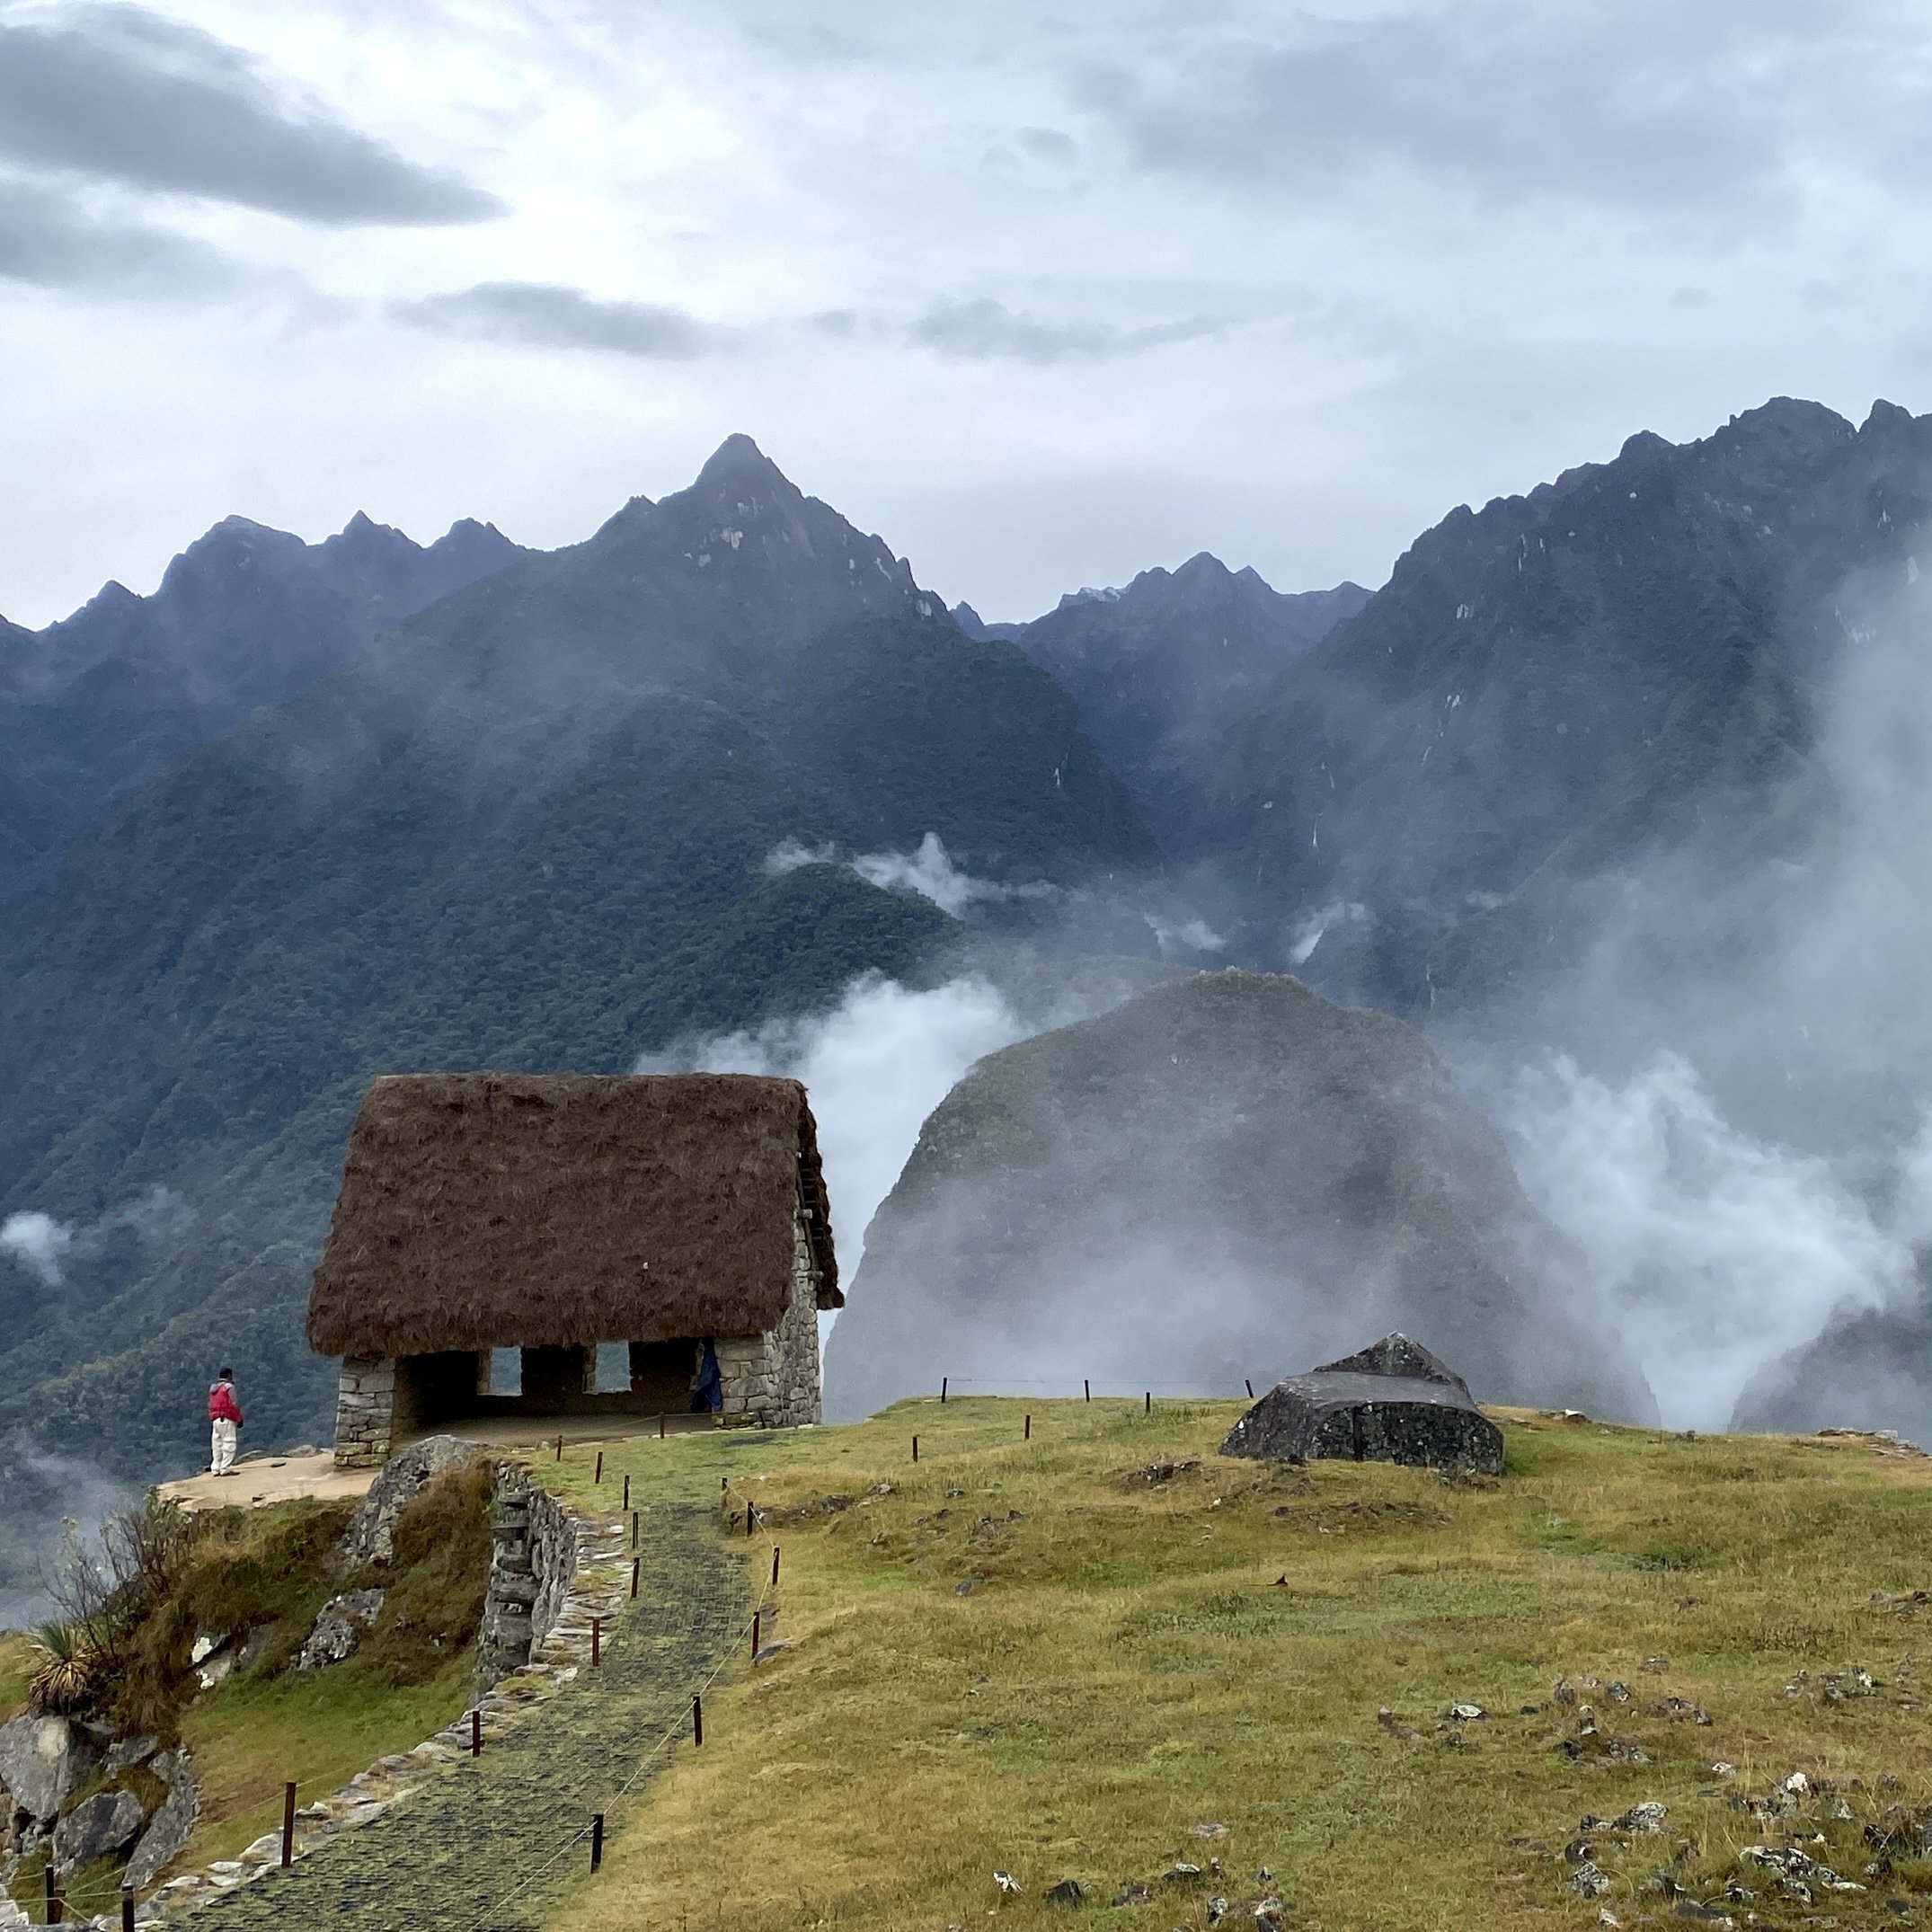  Machu Picchu scene in the Andes Mountains of Peru. 